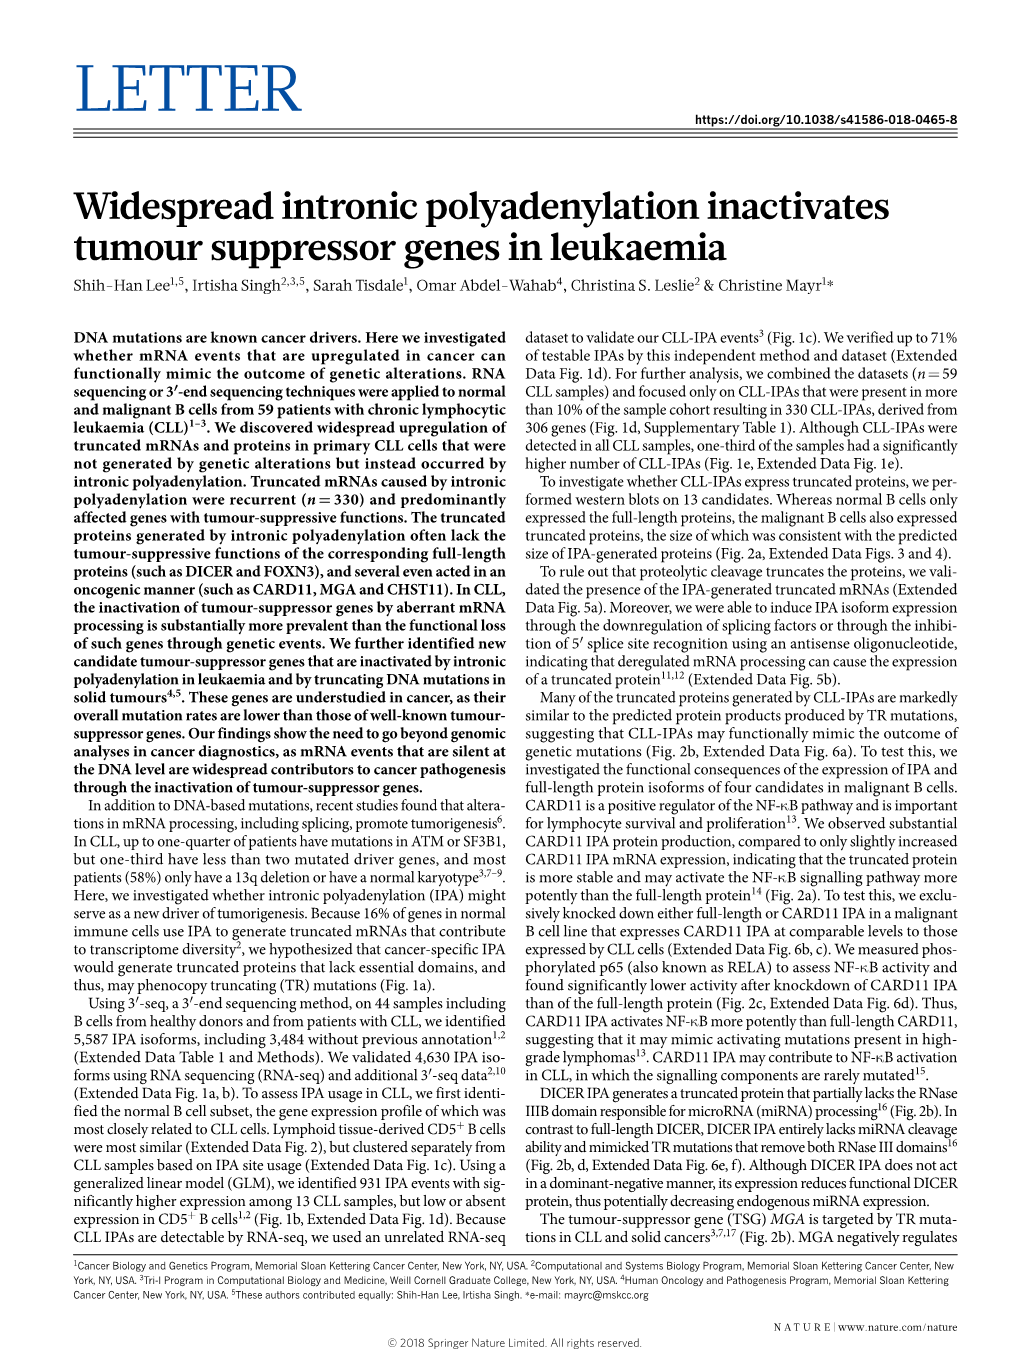 Widespread Intronic Polyadenylation Inactivates Tumour Suppressor